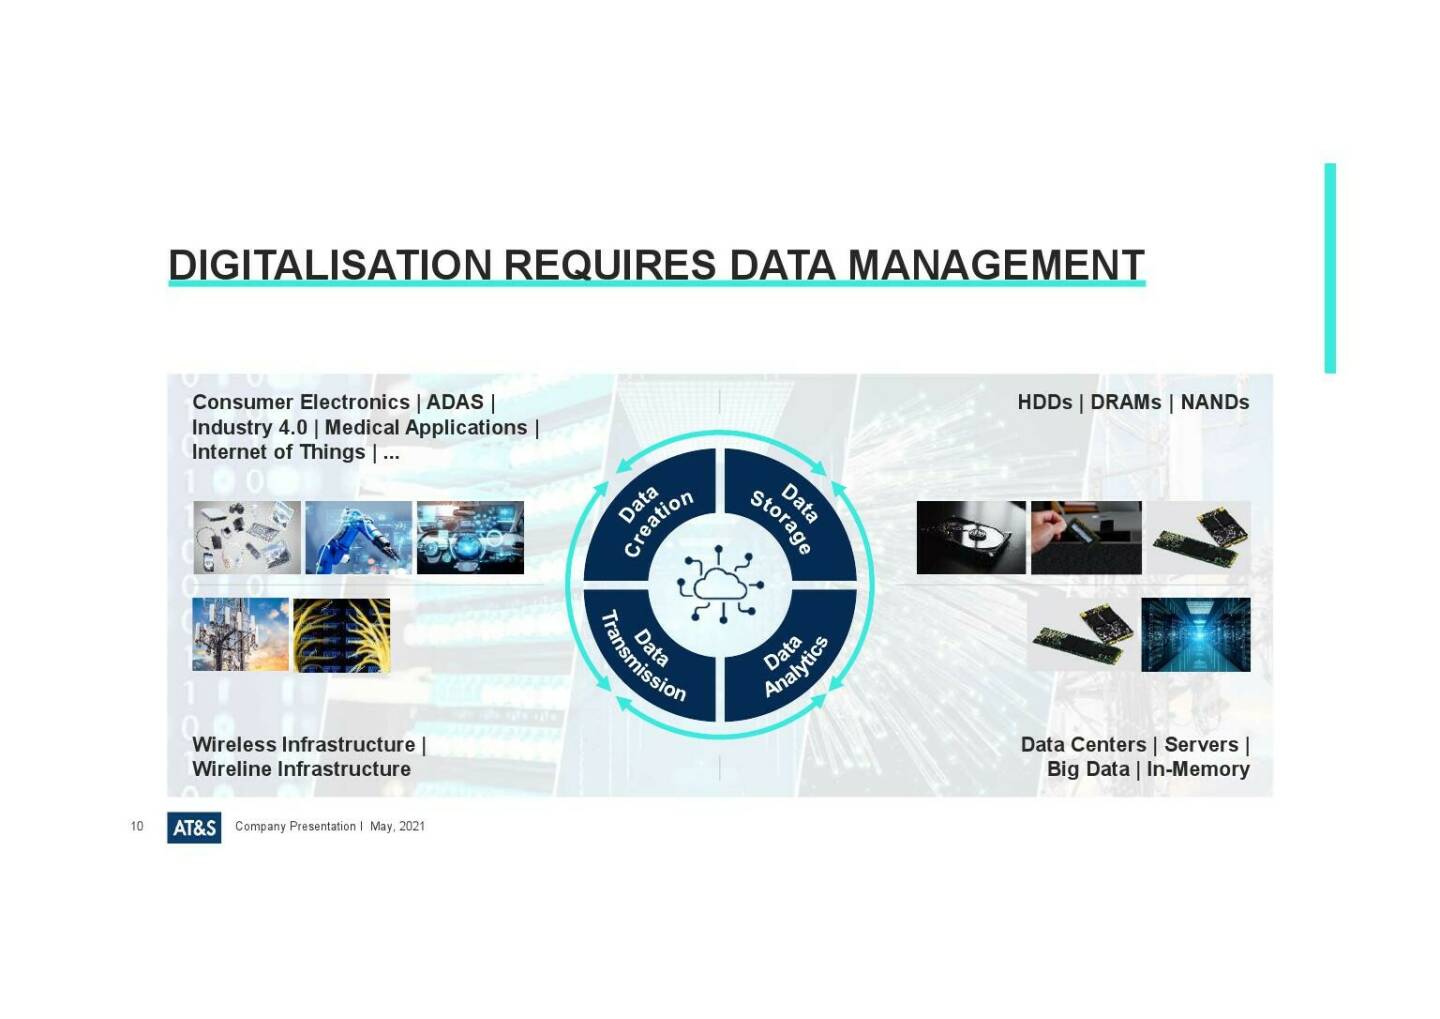 AT&S - Digitalisation requires data management 